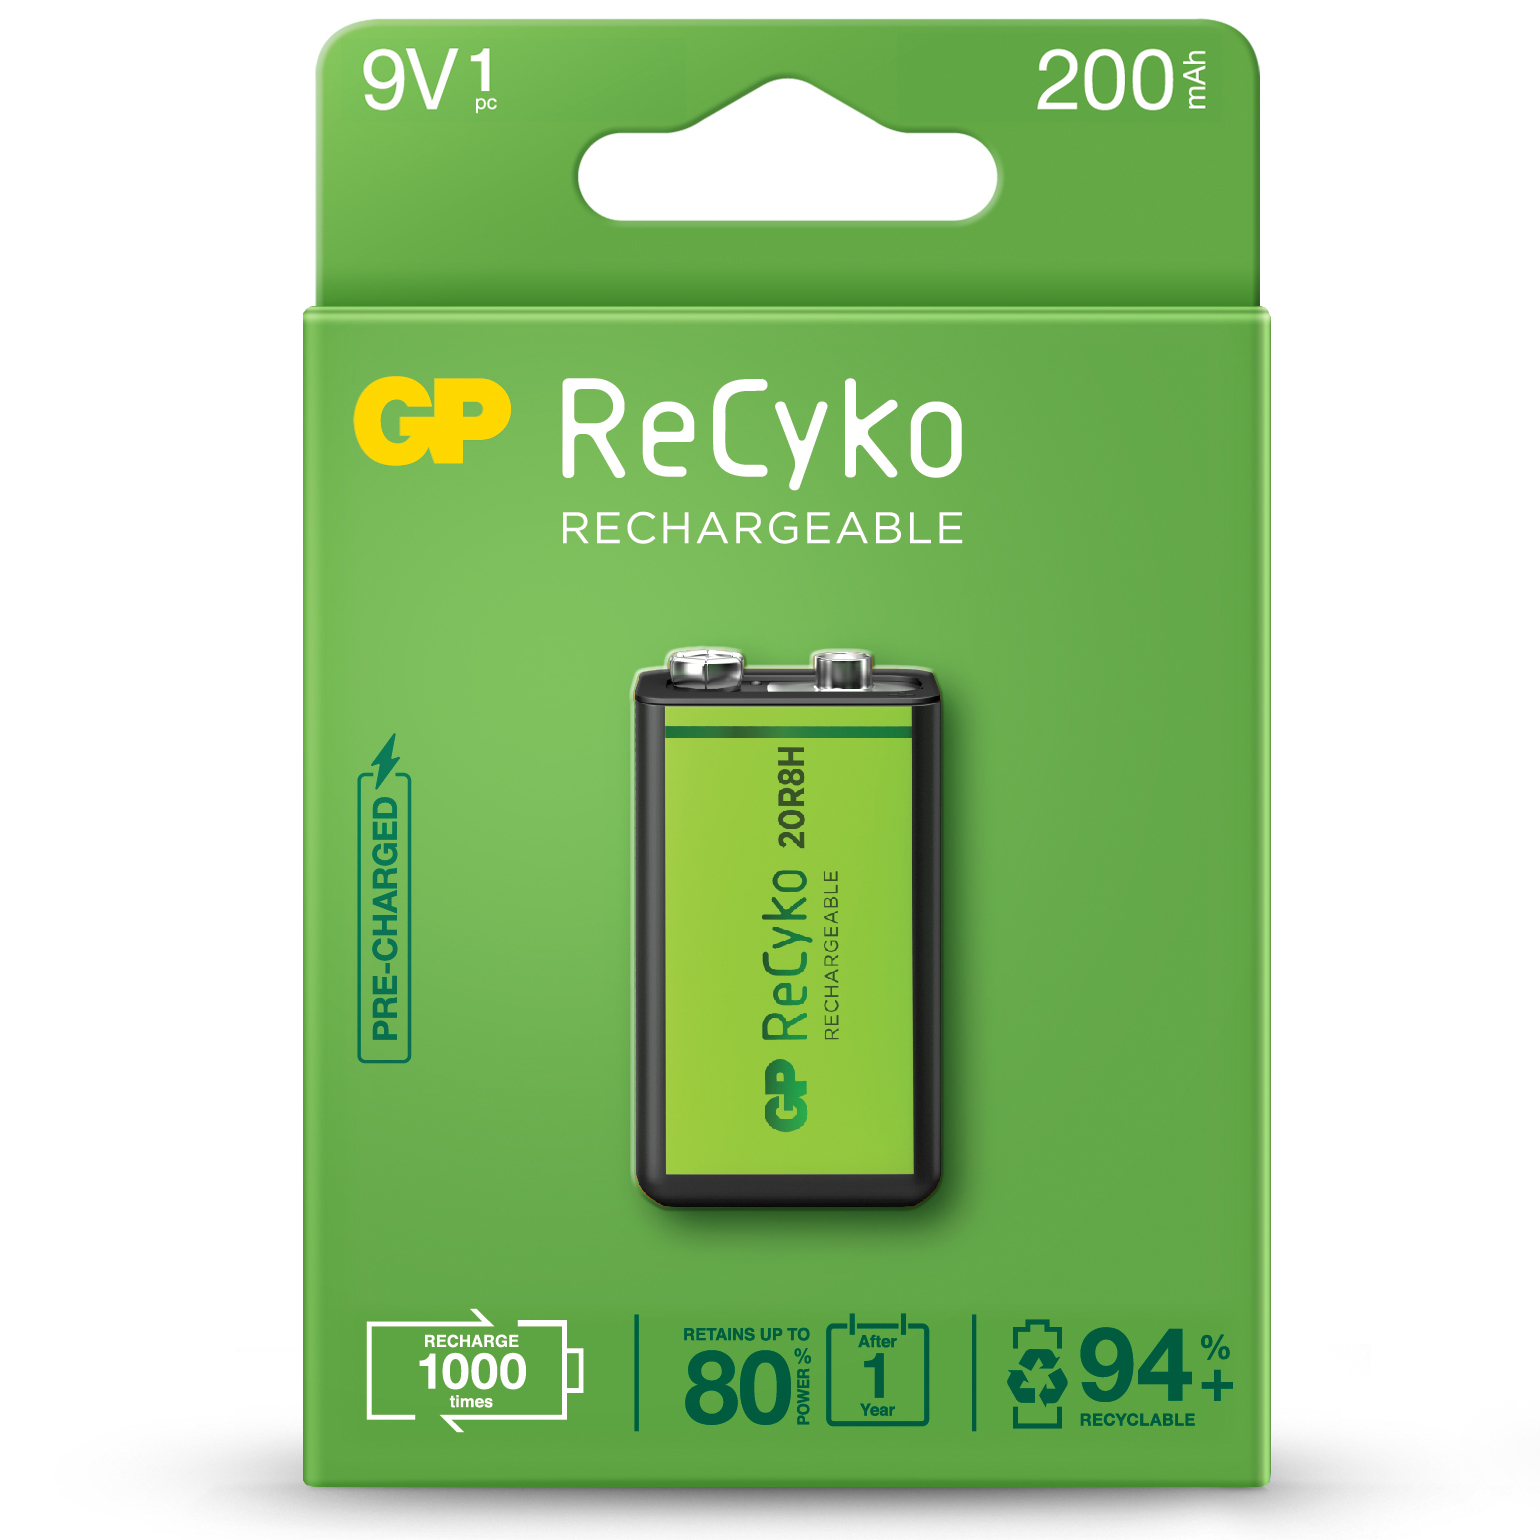 9V, LR09 ReCyko rechargeable 200mAh - Blister 1u